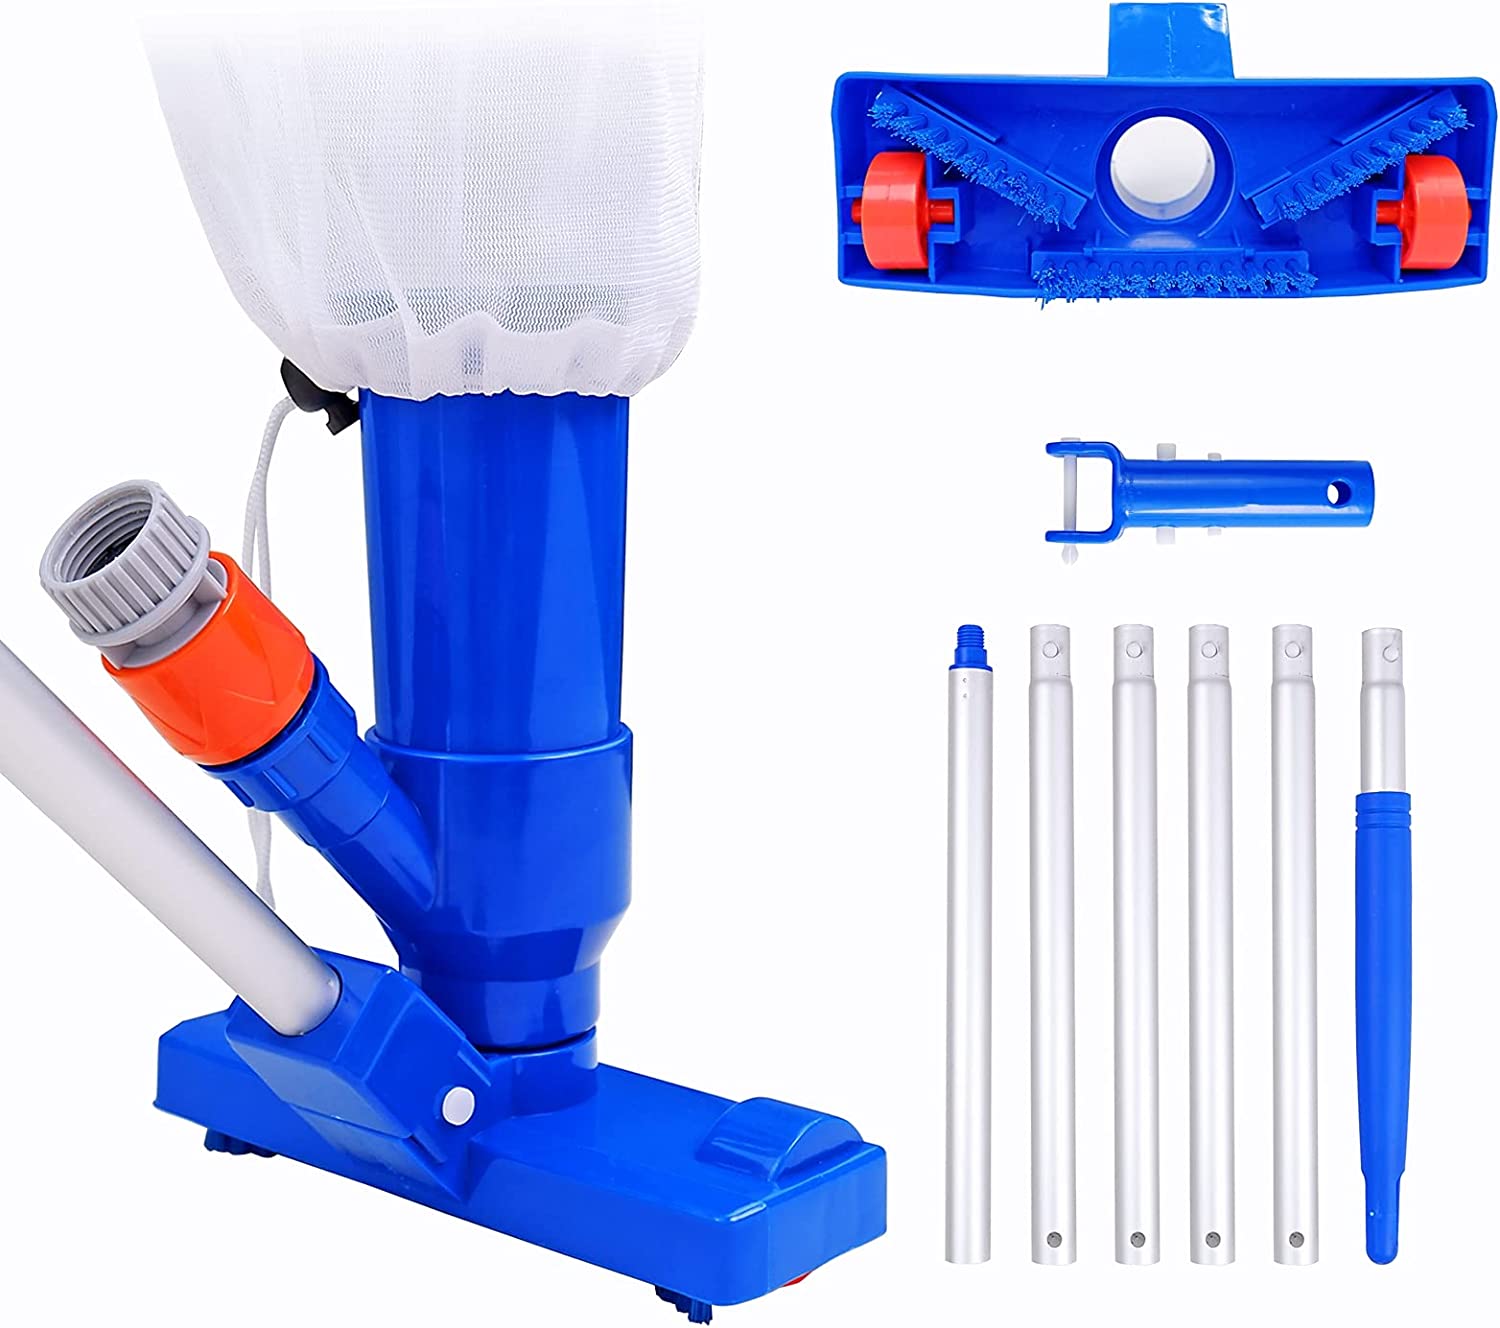 Portable Pool Vacuums Jet Cleaner Kit for Above Ground Pools, Spa Pond Mini Vacuum Cleaner